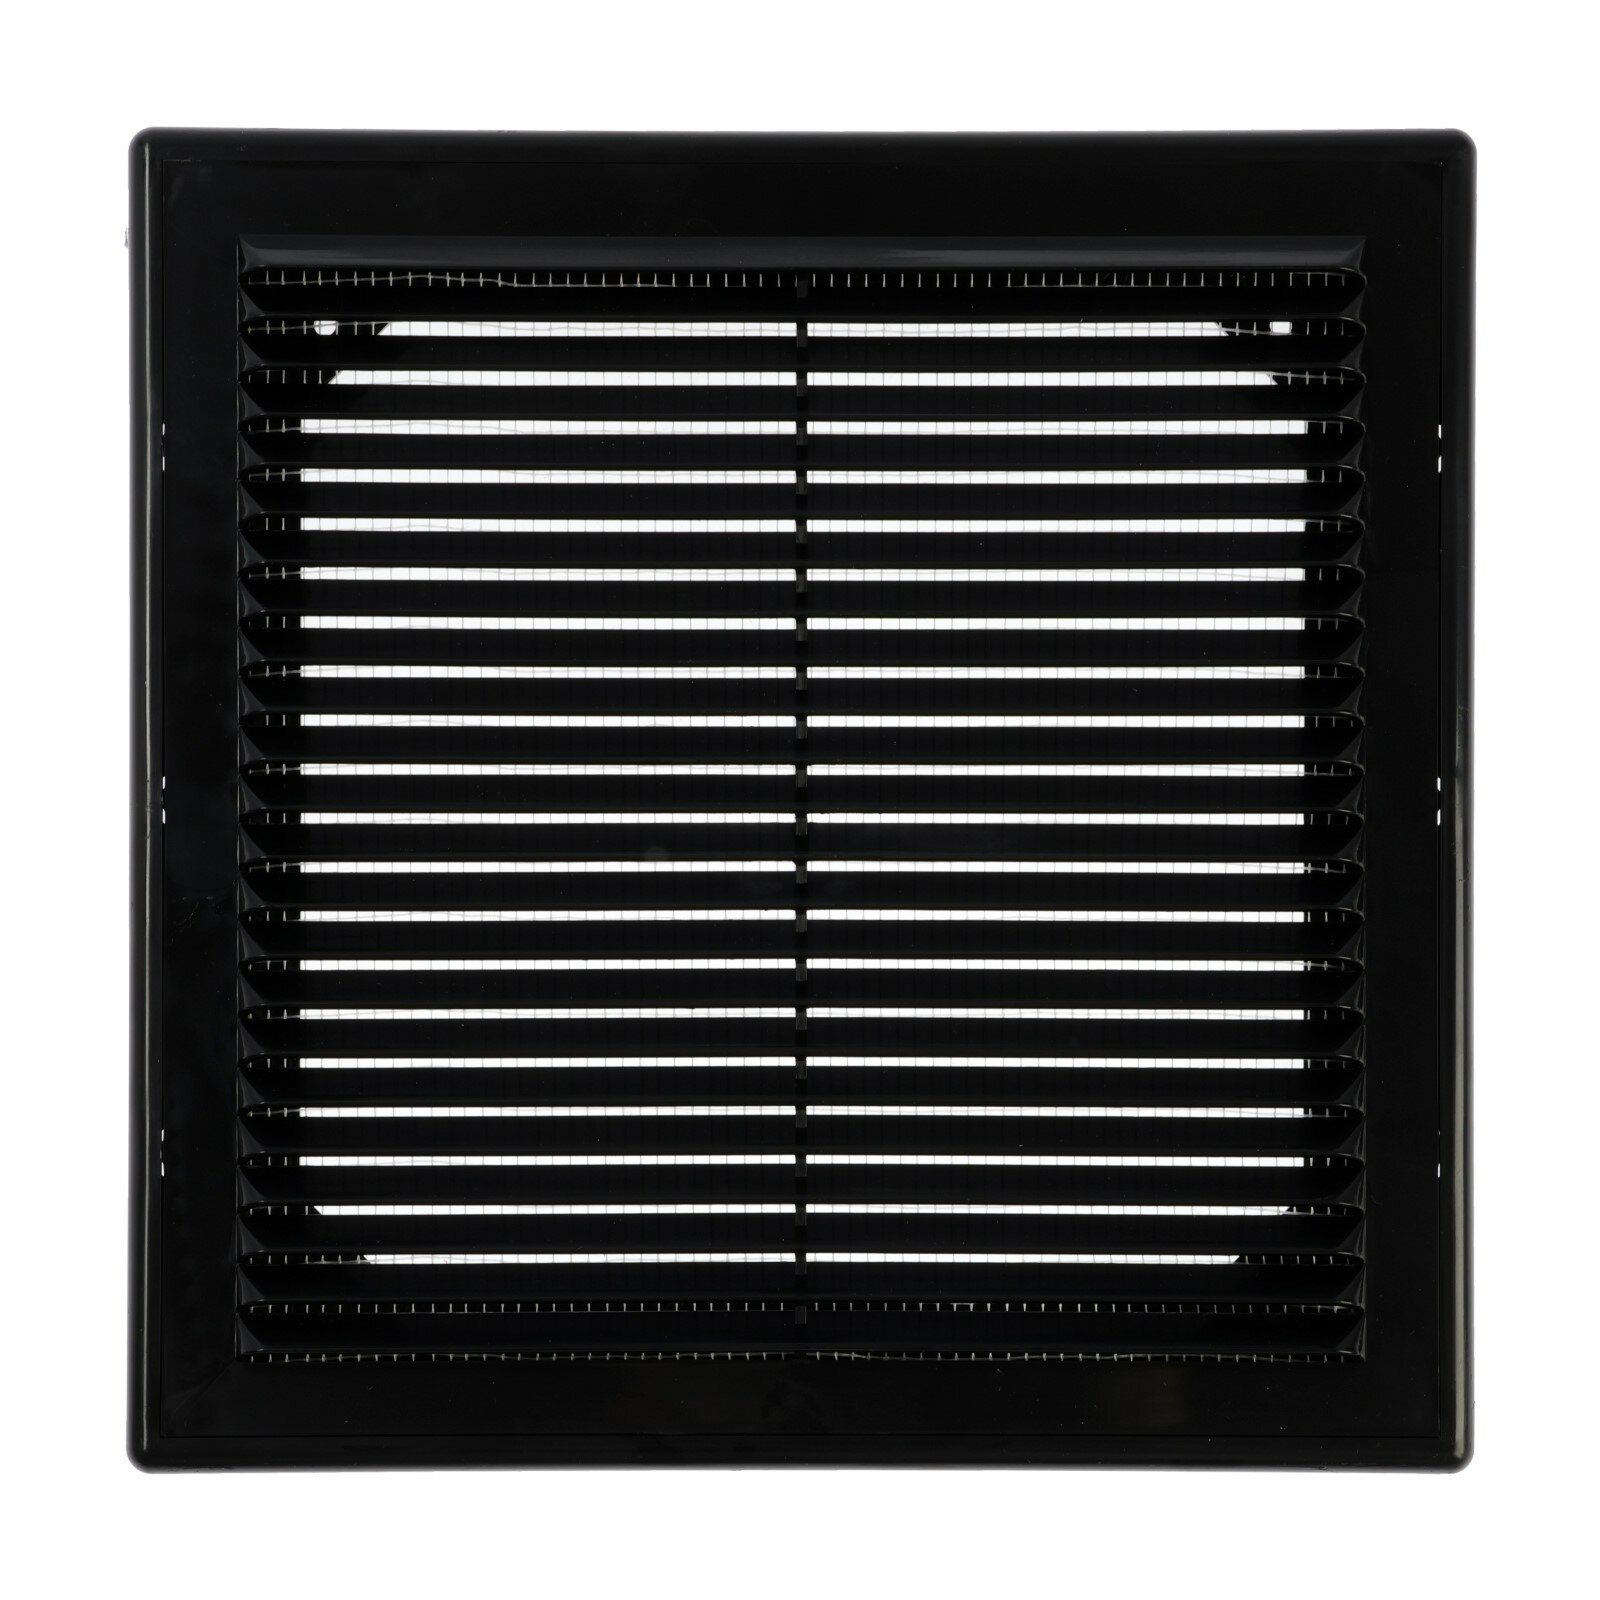 Решетка вентиляционная "виенто" 2525ВР, 250х250 мм, с сеткой, разъемная, черная